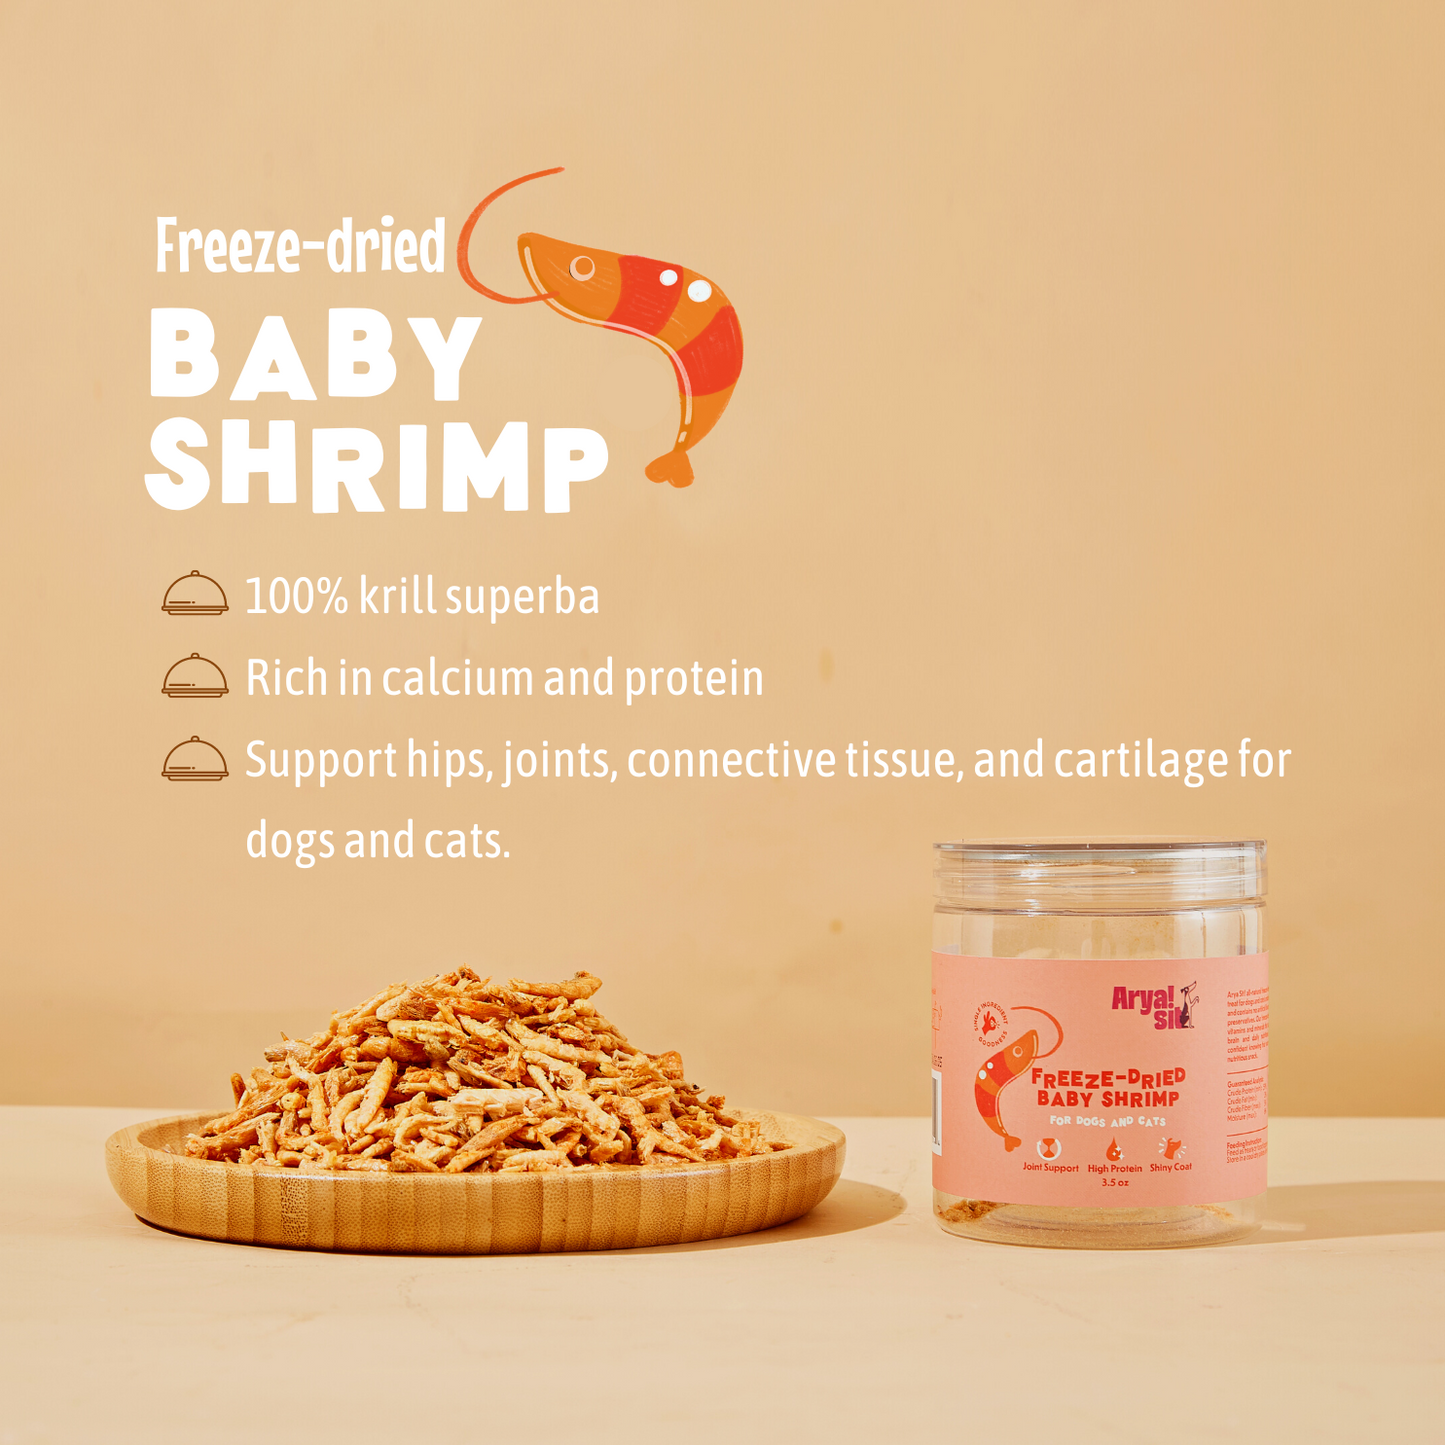 Freeze-dried Baby Shrimp